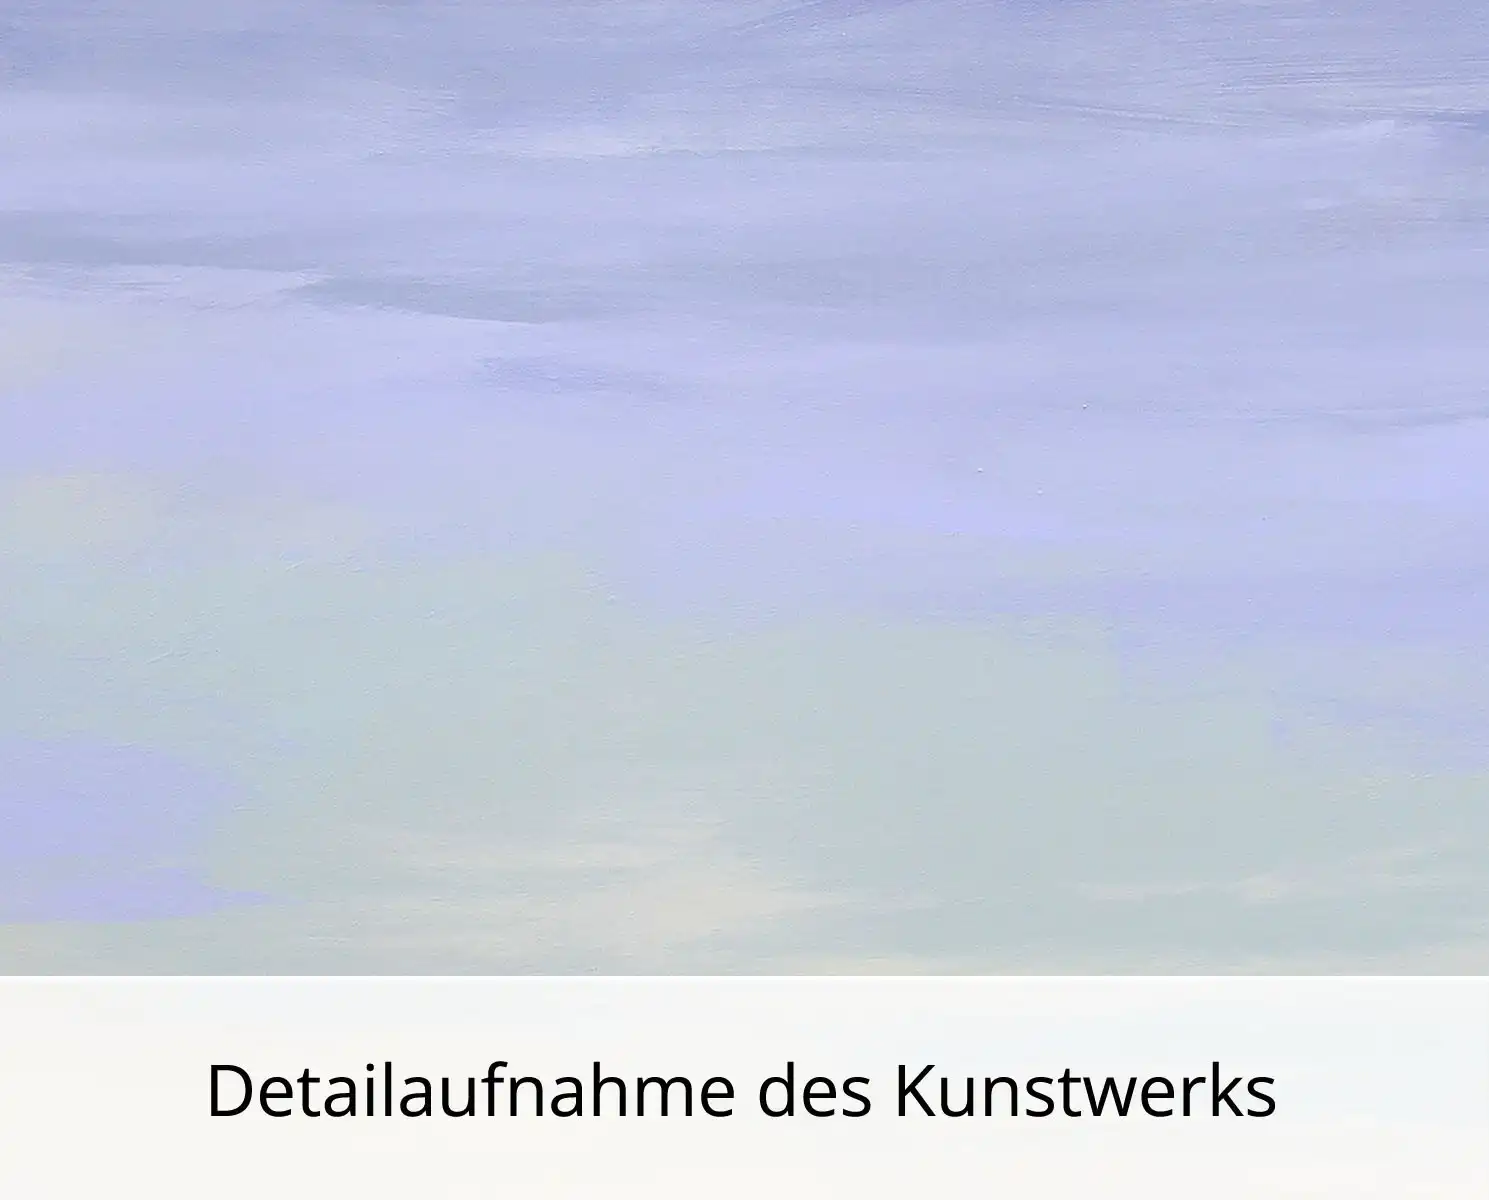 M. Kühne: "Flussufer im Winter", Edition, signierter Kunstdruck, Nr. 1/25